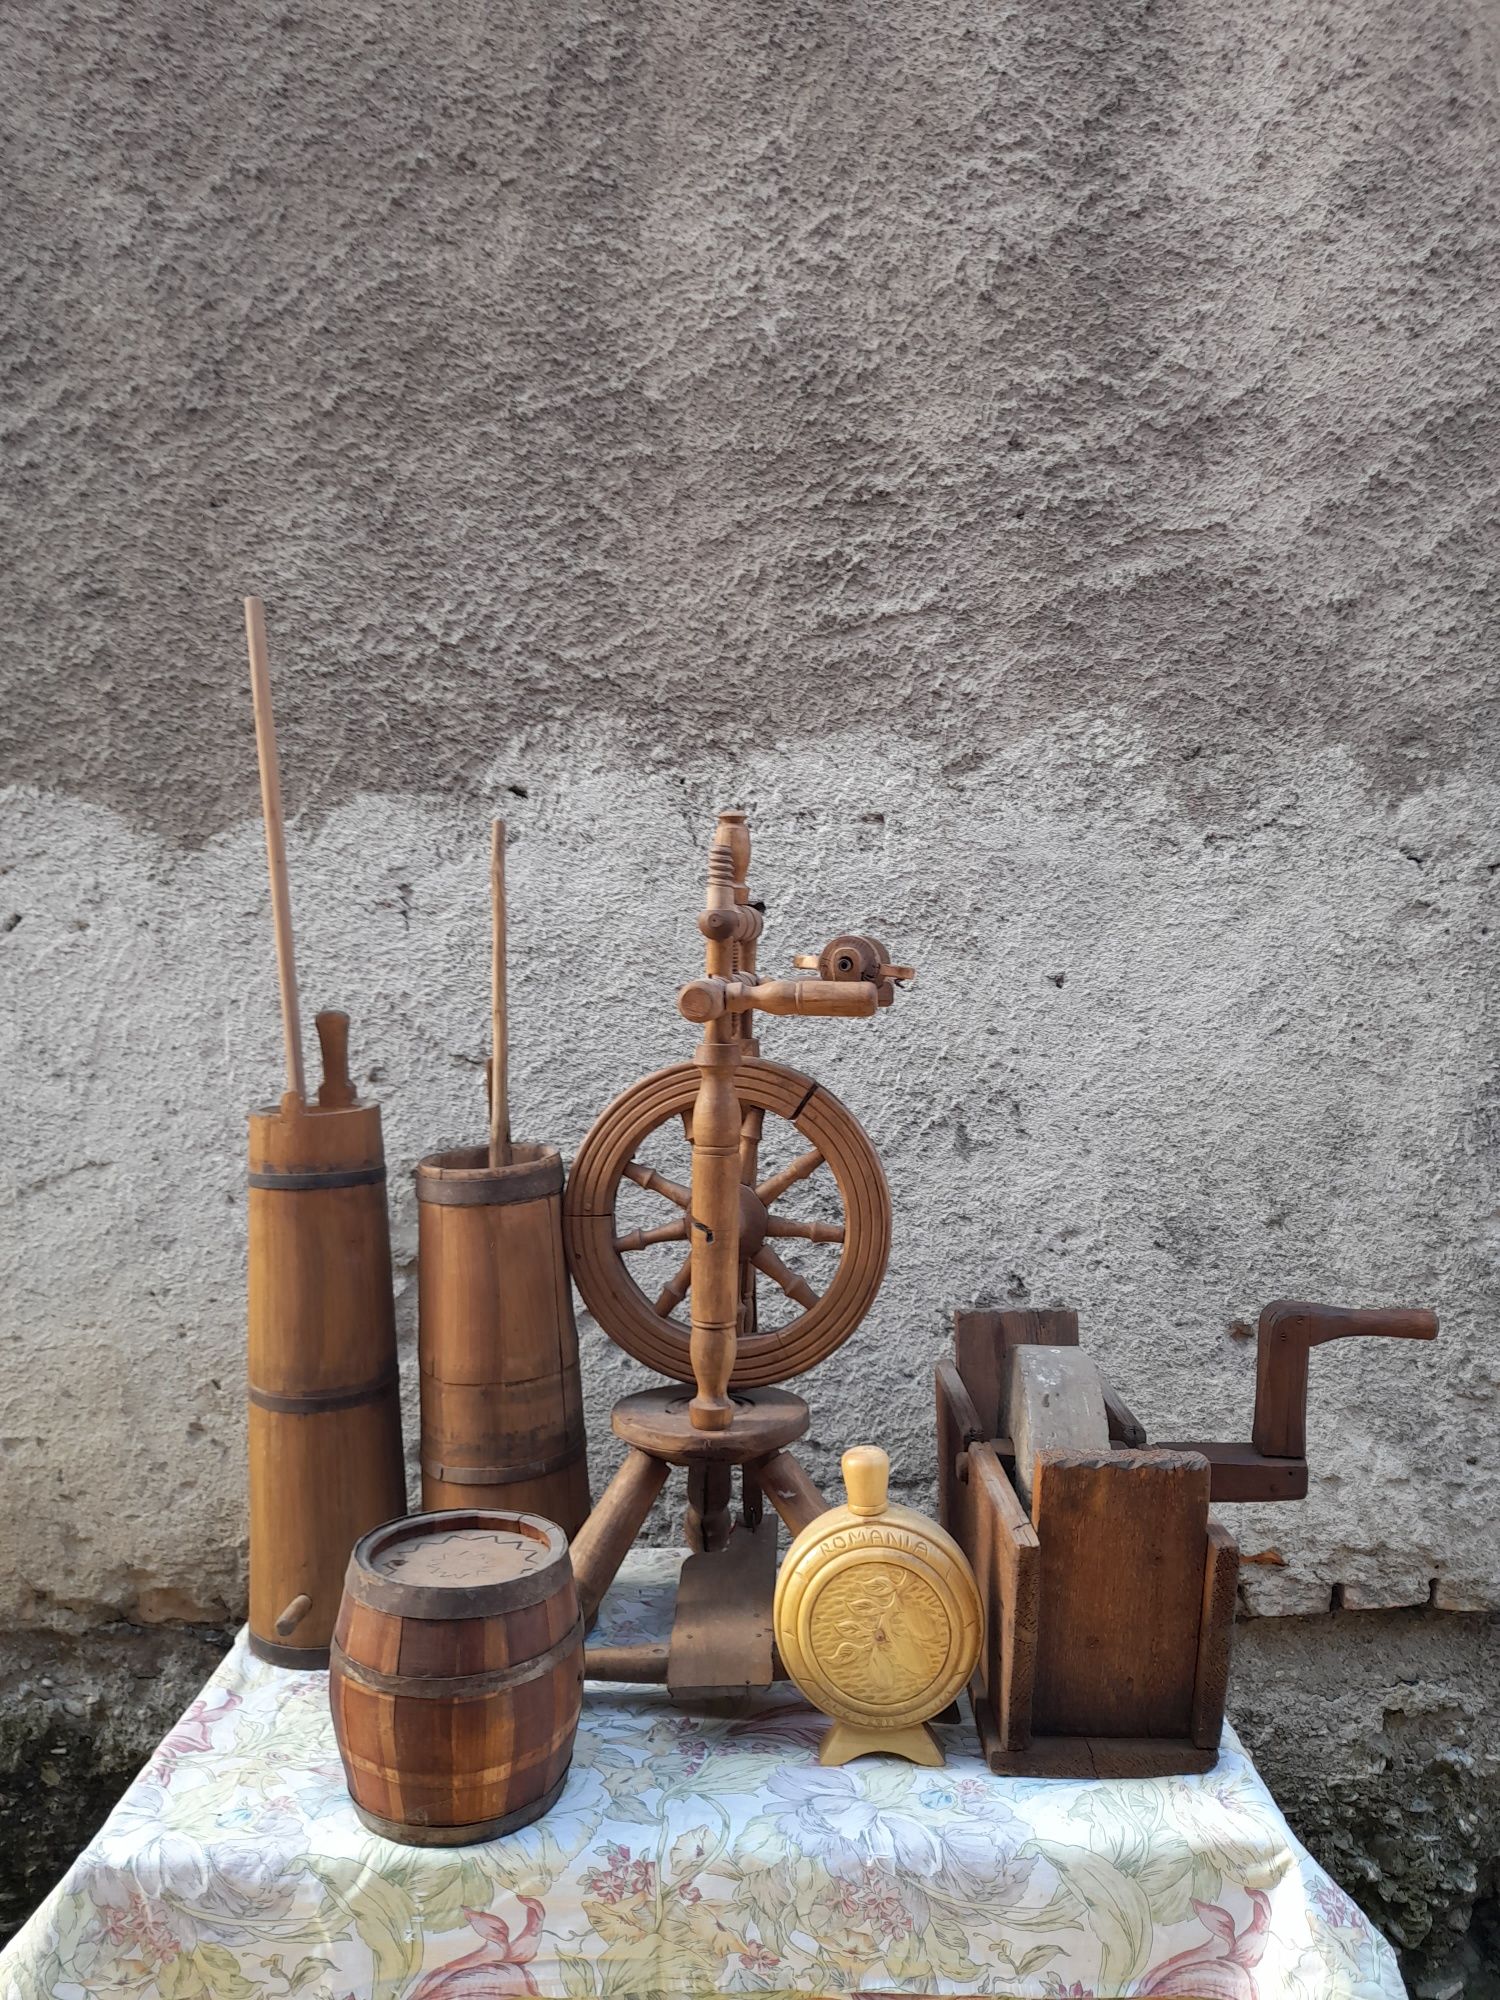 Vând obiecte vechi Taranesti